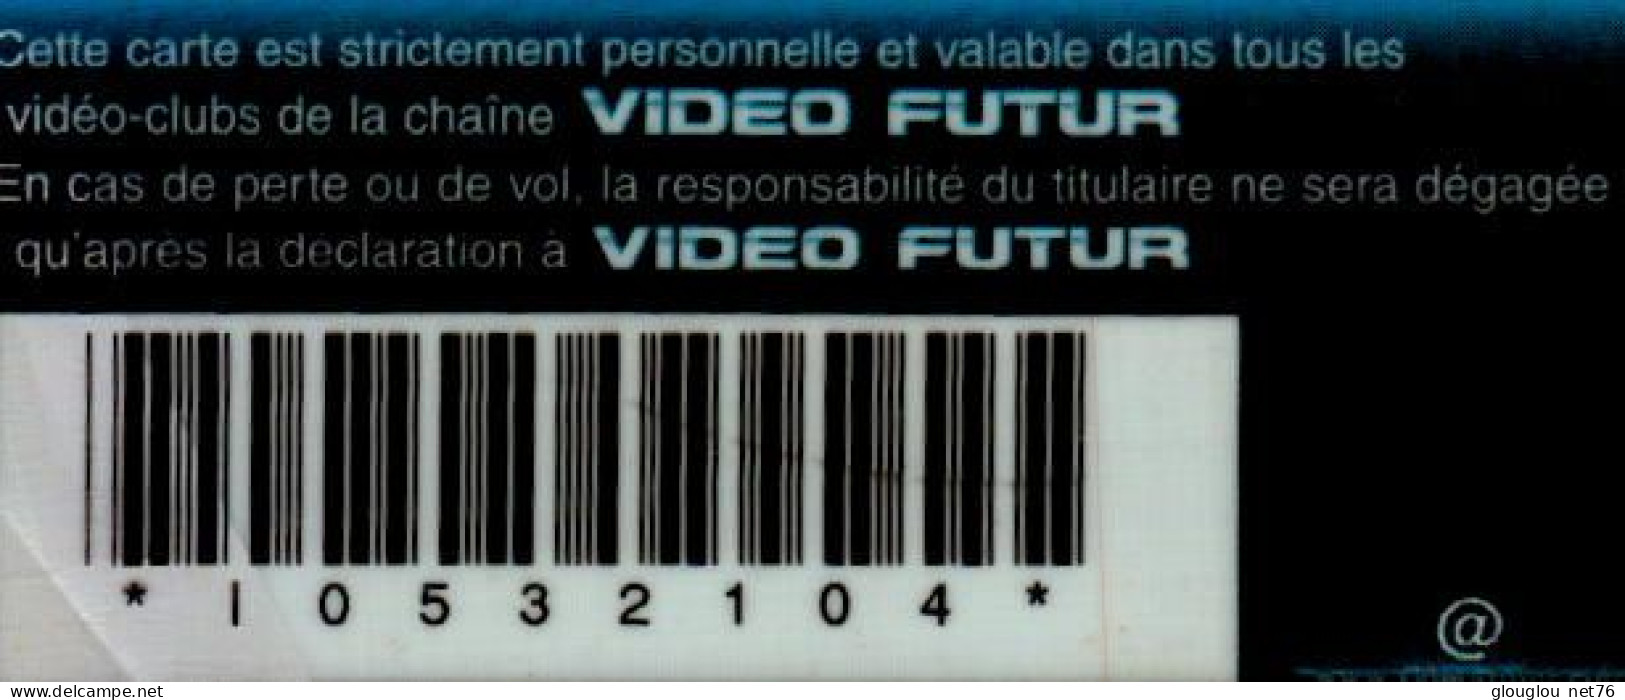 VIDEO FUTUR.. CARTE PRIVILEGE - Subscription